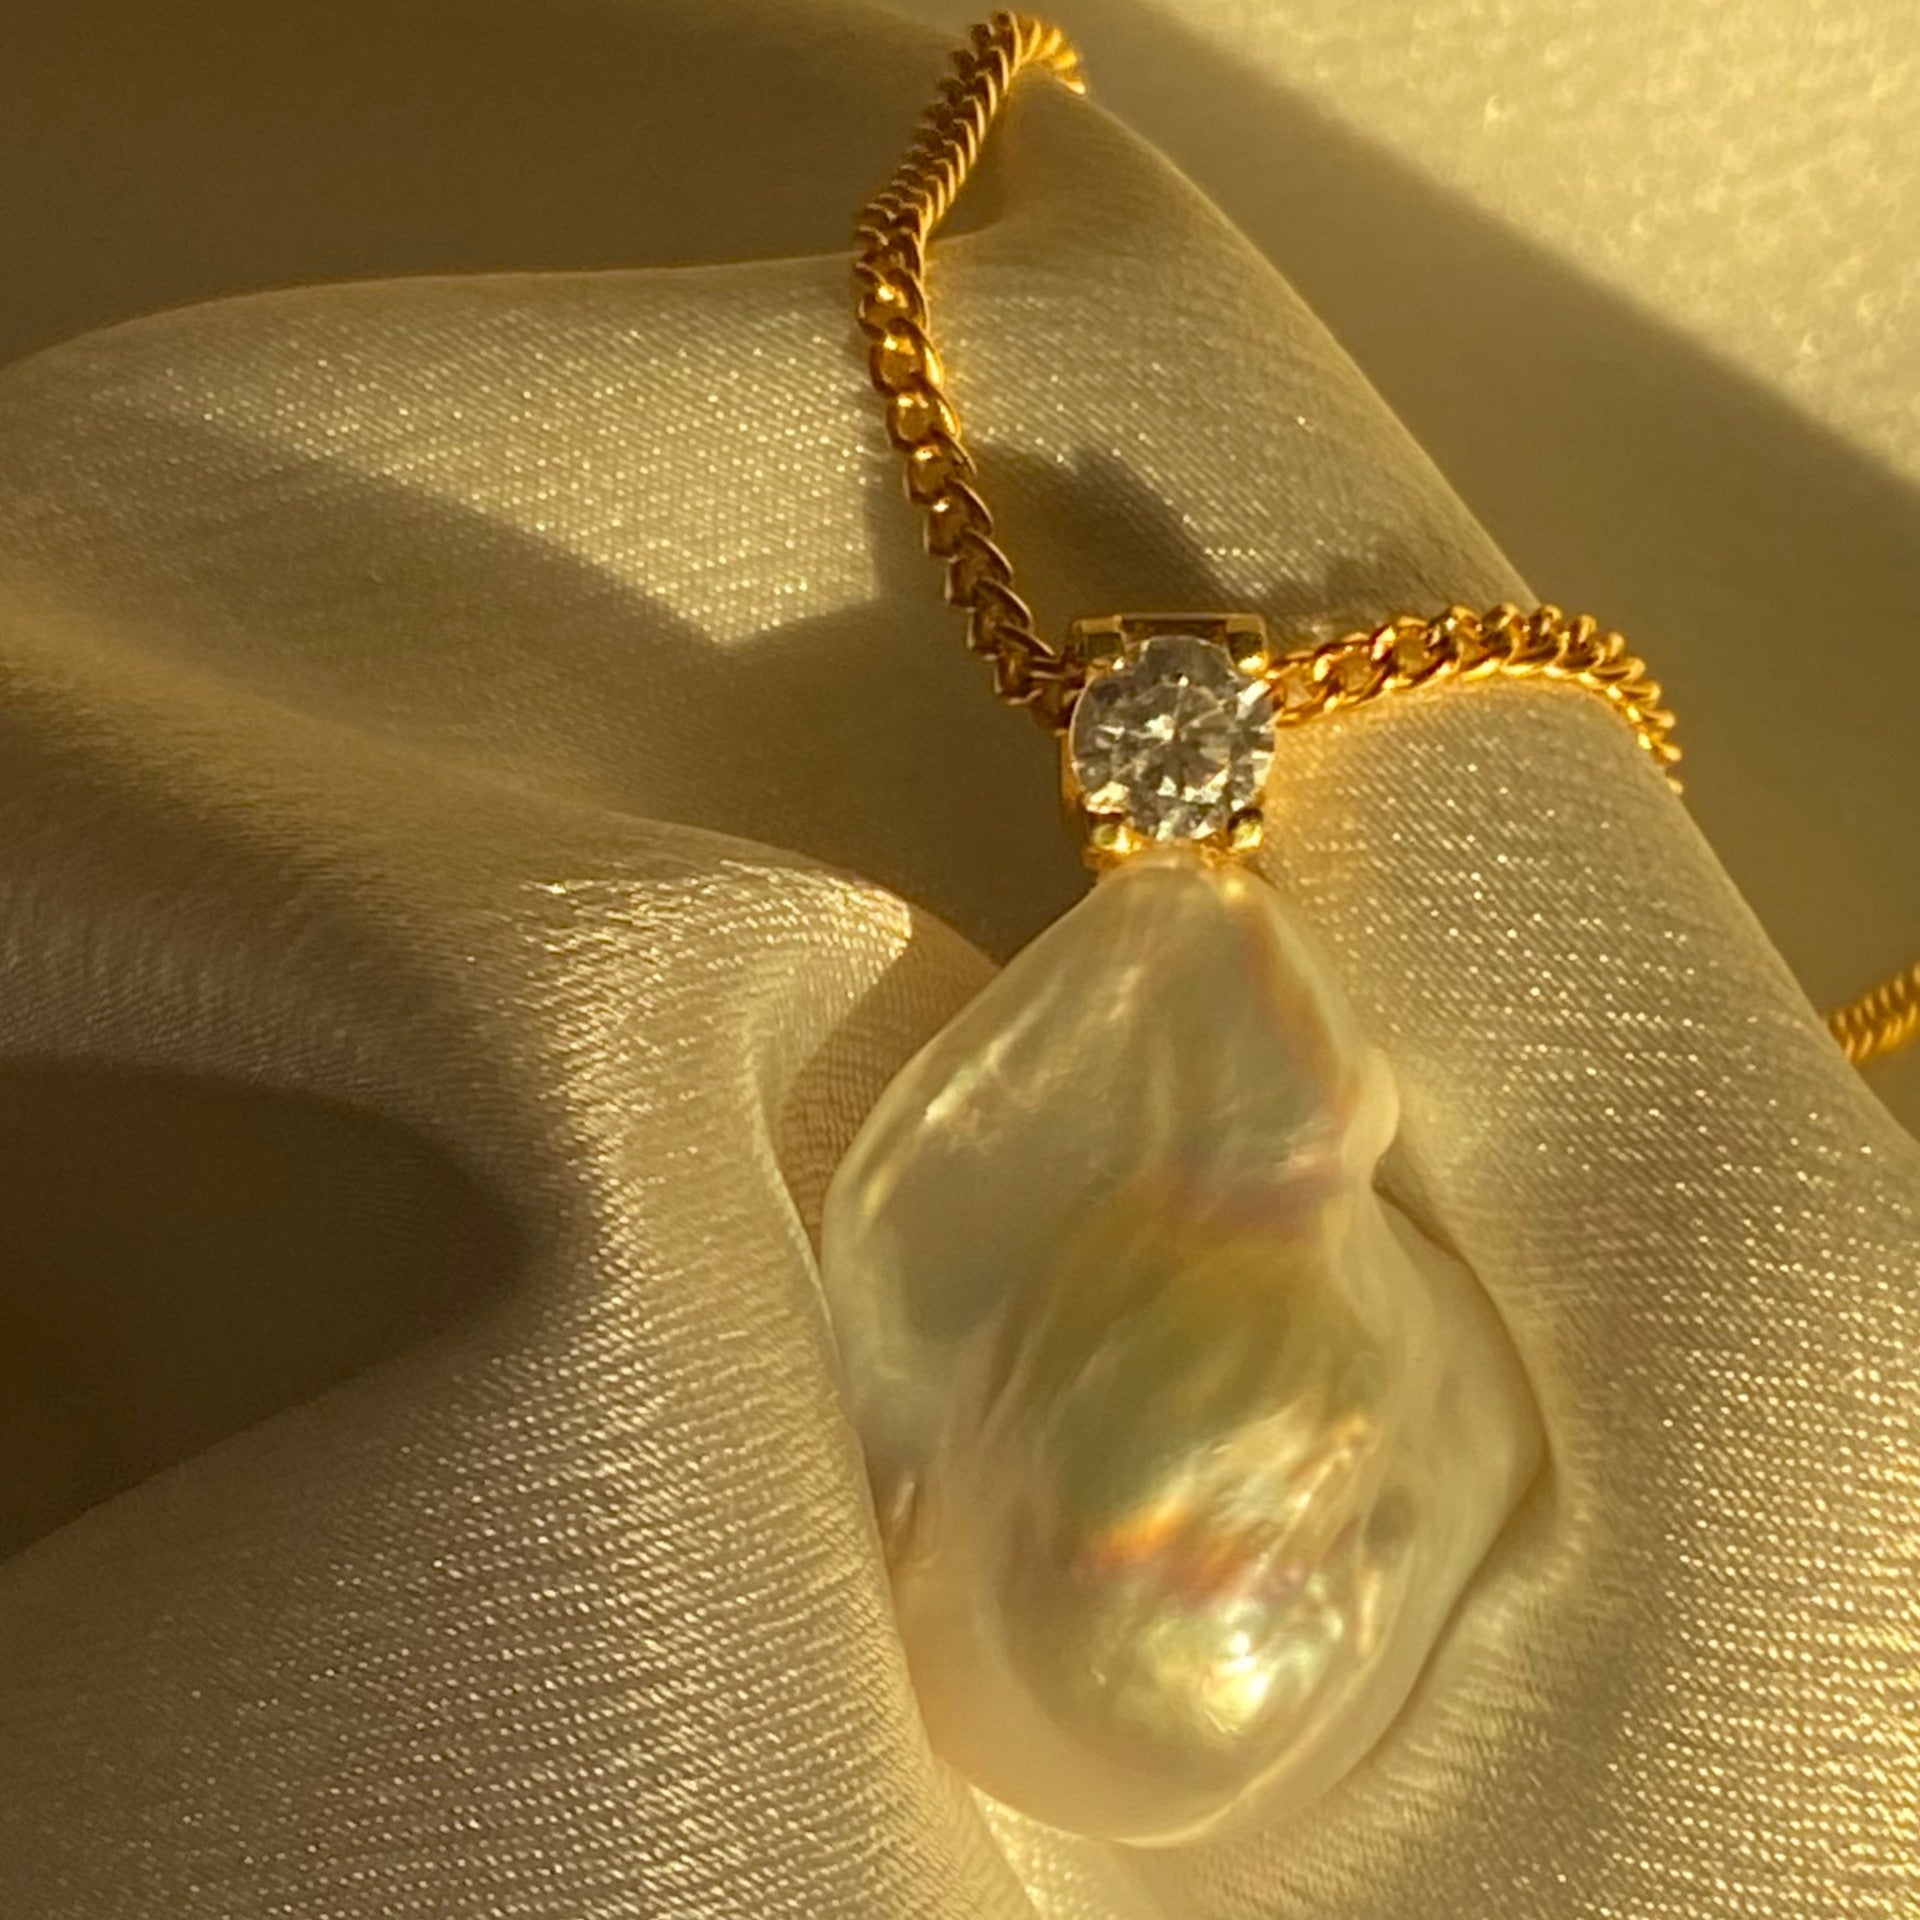 Baroque Pearl And Swarovski Crystal Chain